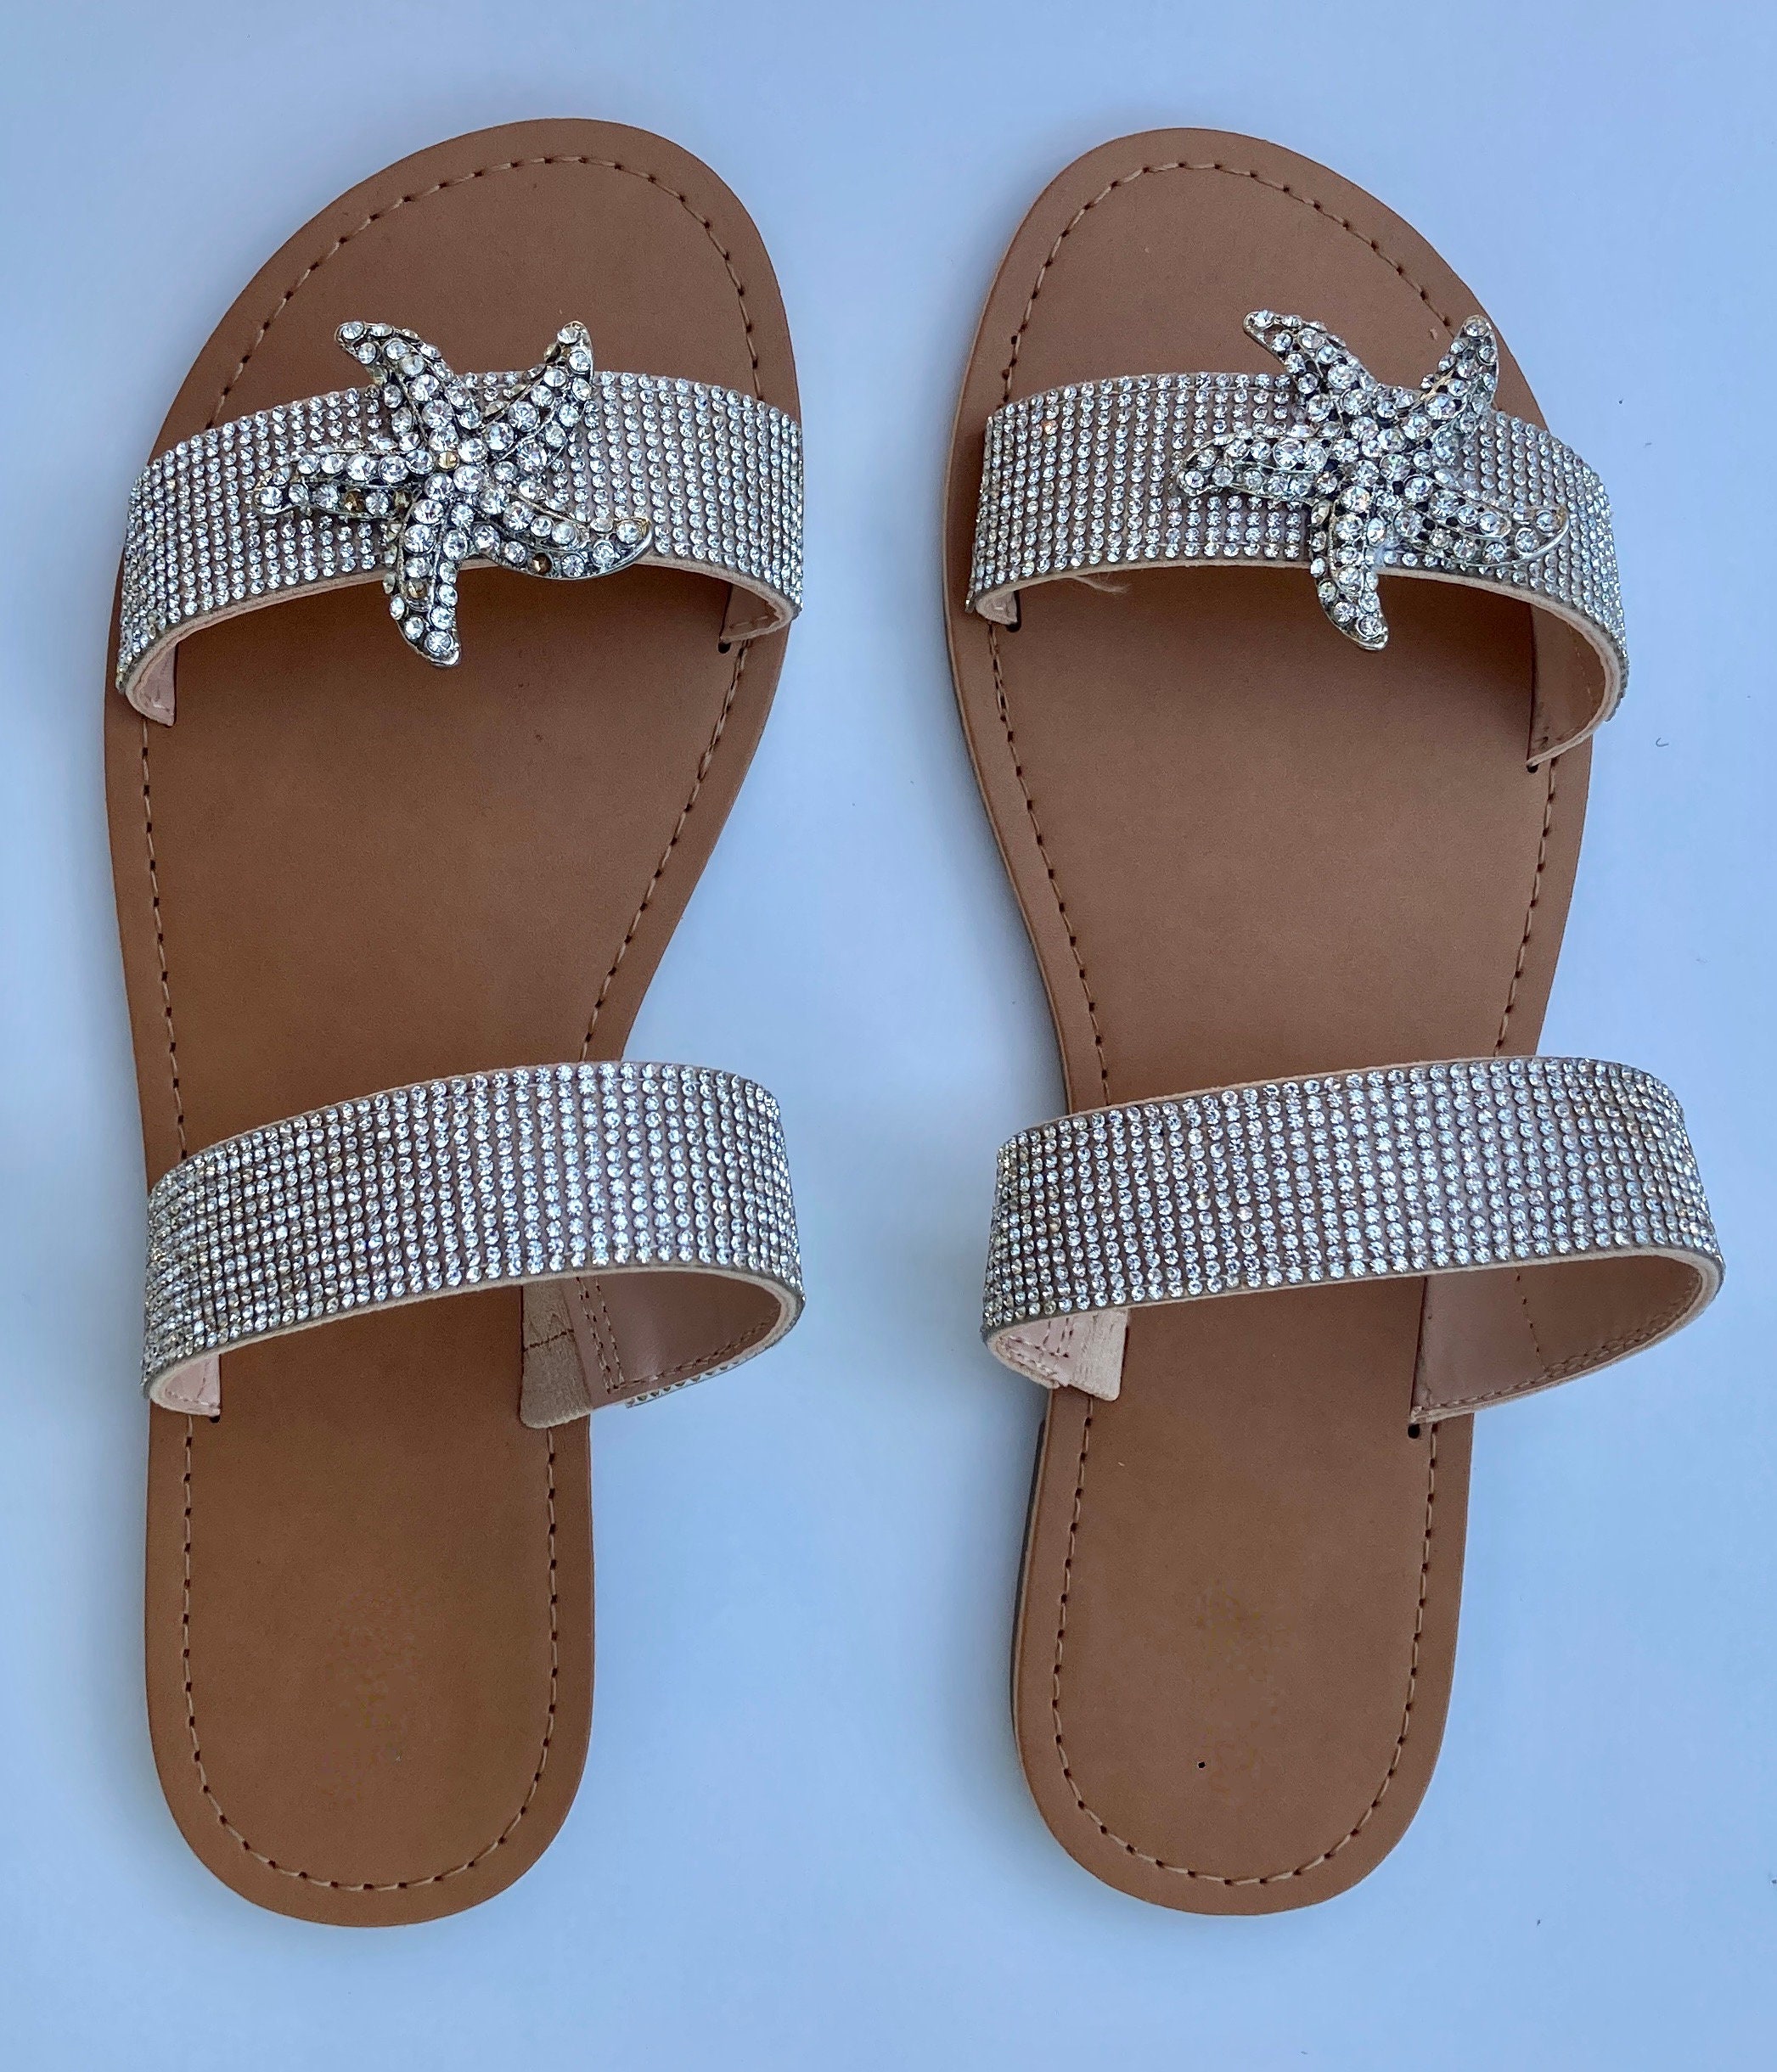 Aquata starfish shoe clip